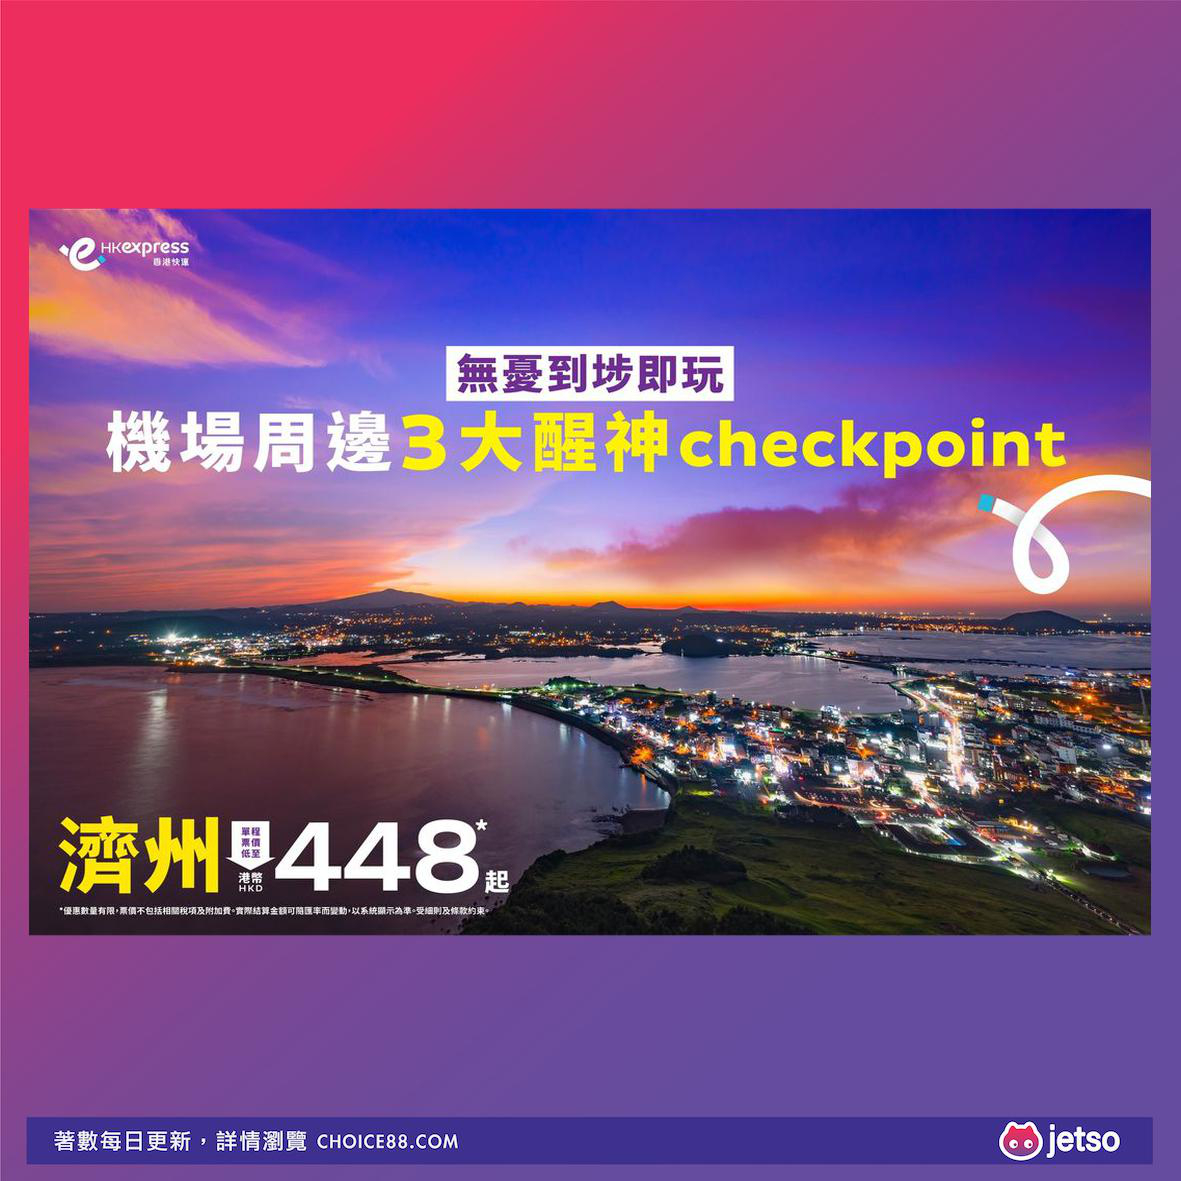 HK Express : [机票优惠]济州岛超值旅游